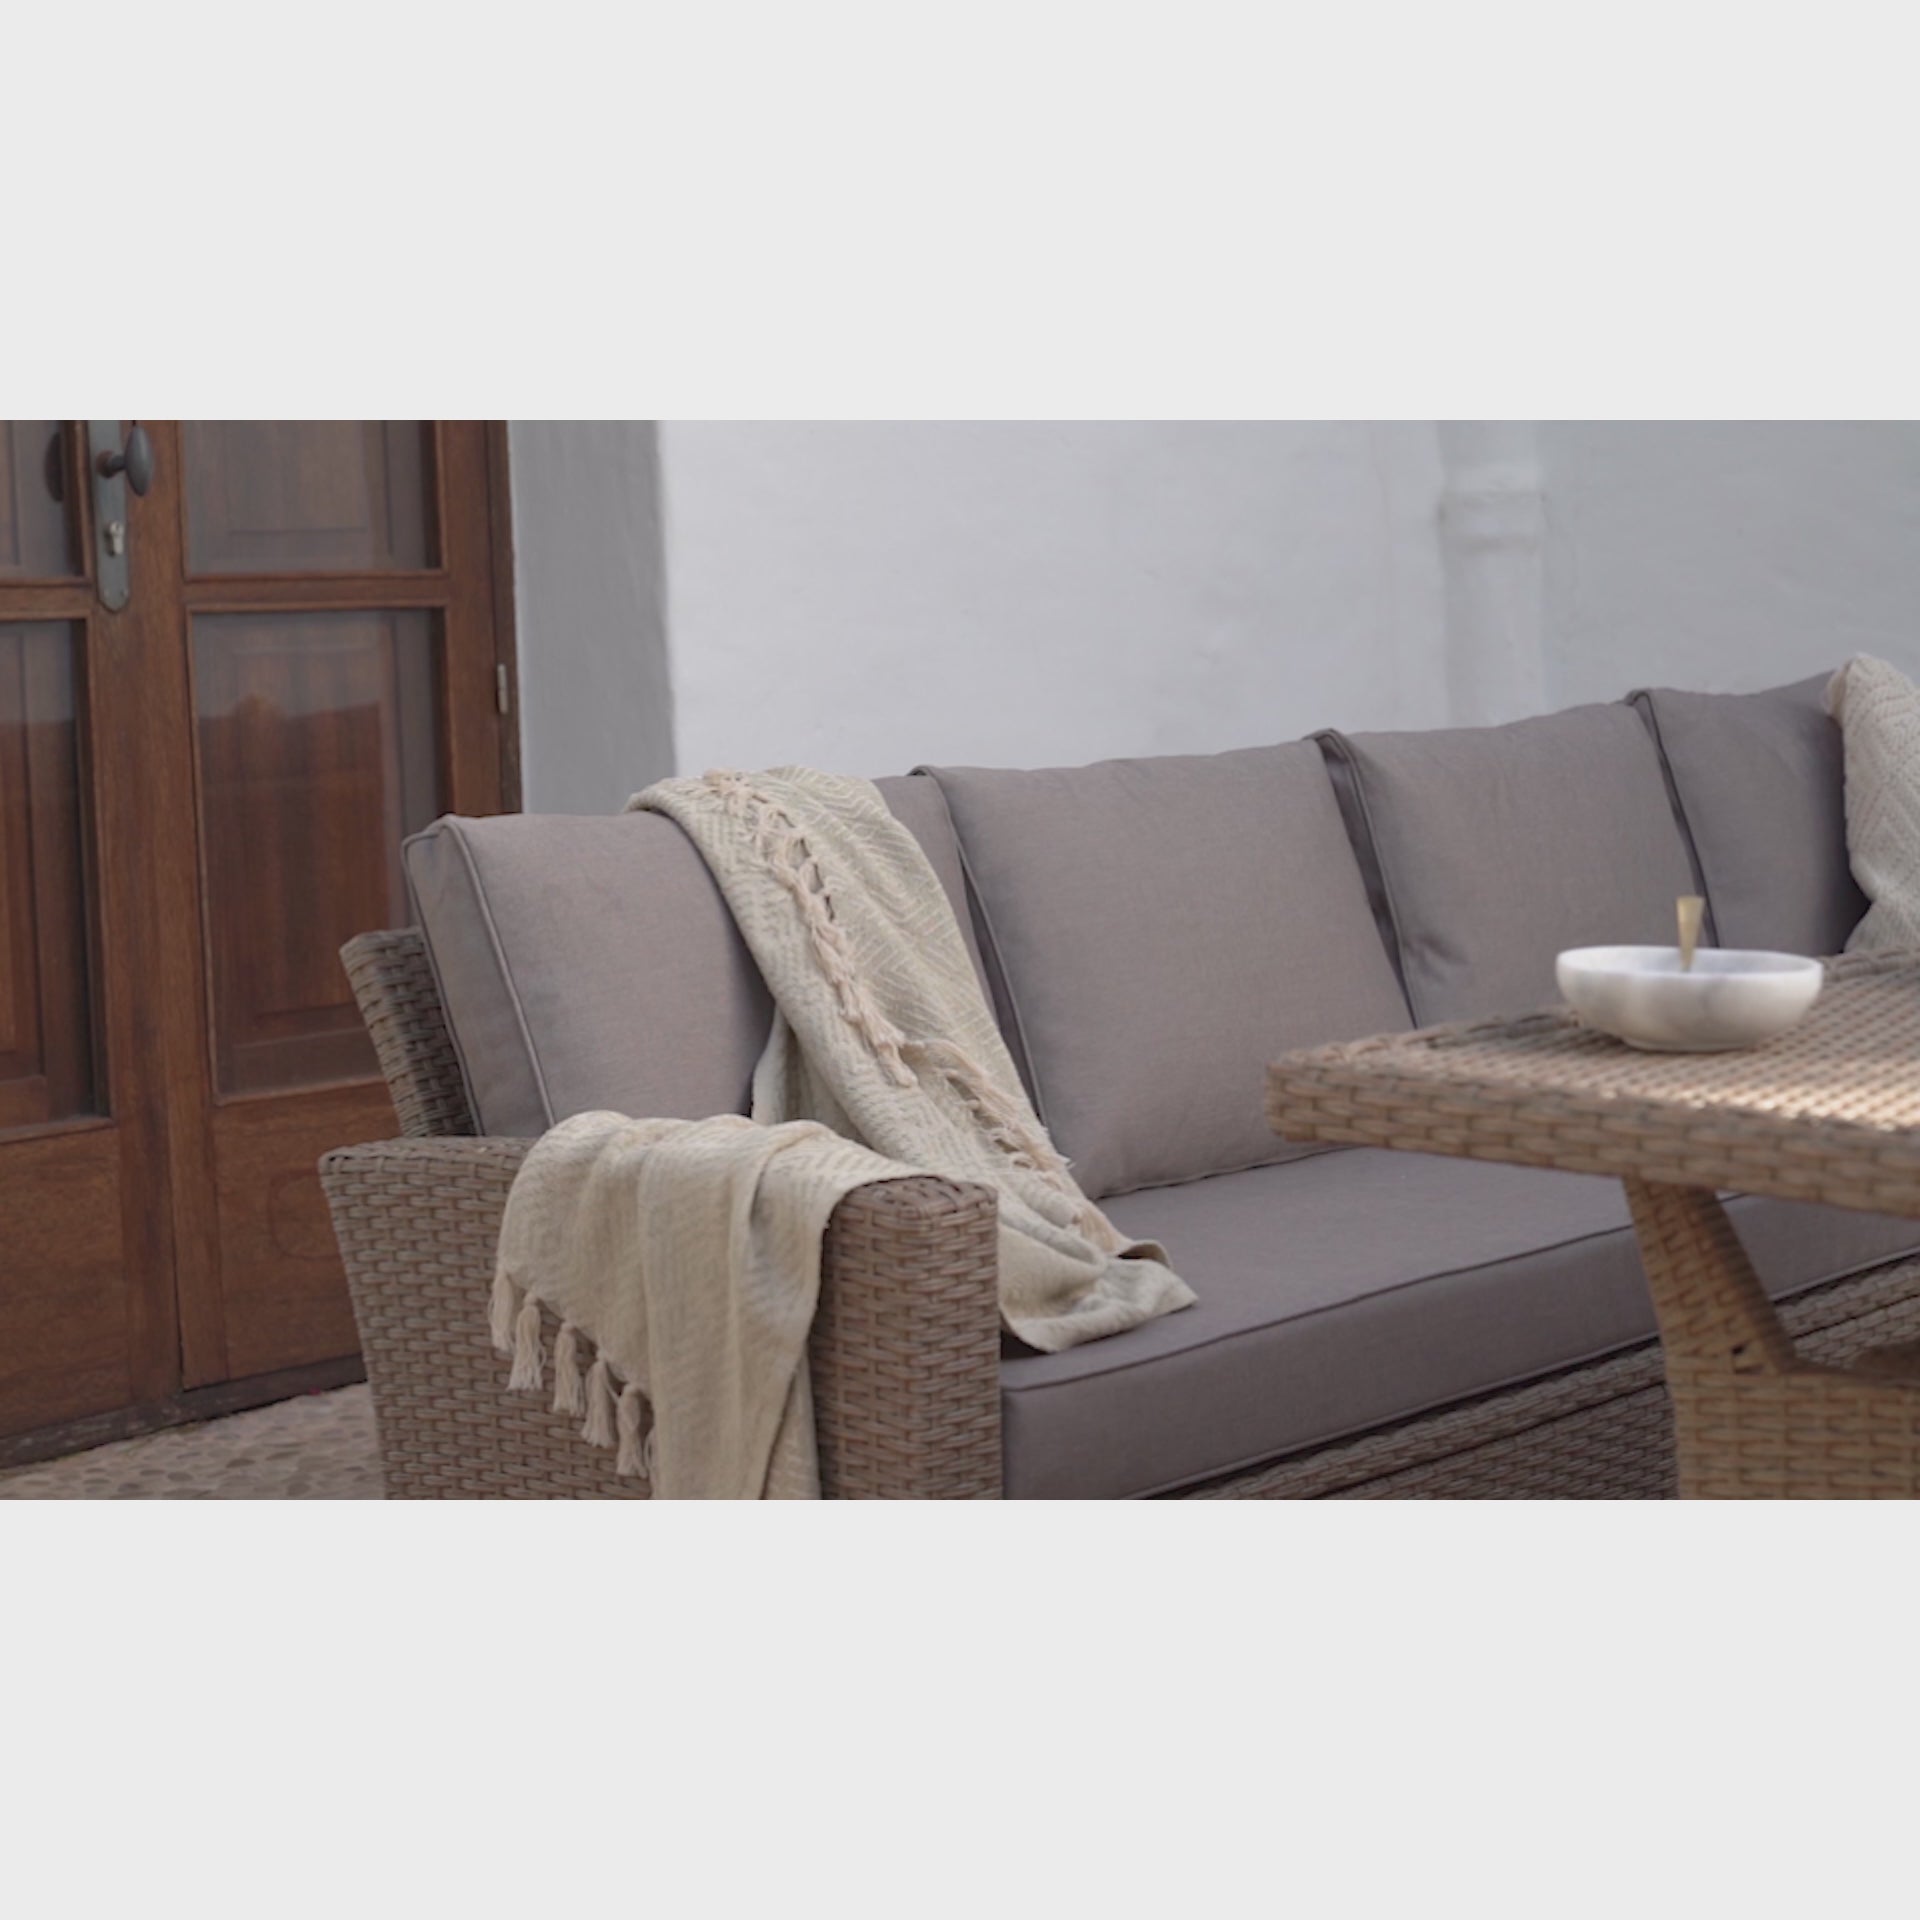 Aston 9 Seater Rattan Corner Sofa Set with parasol - Natural Brown & Grey - Laura James